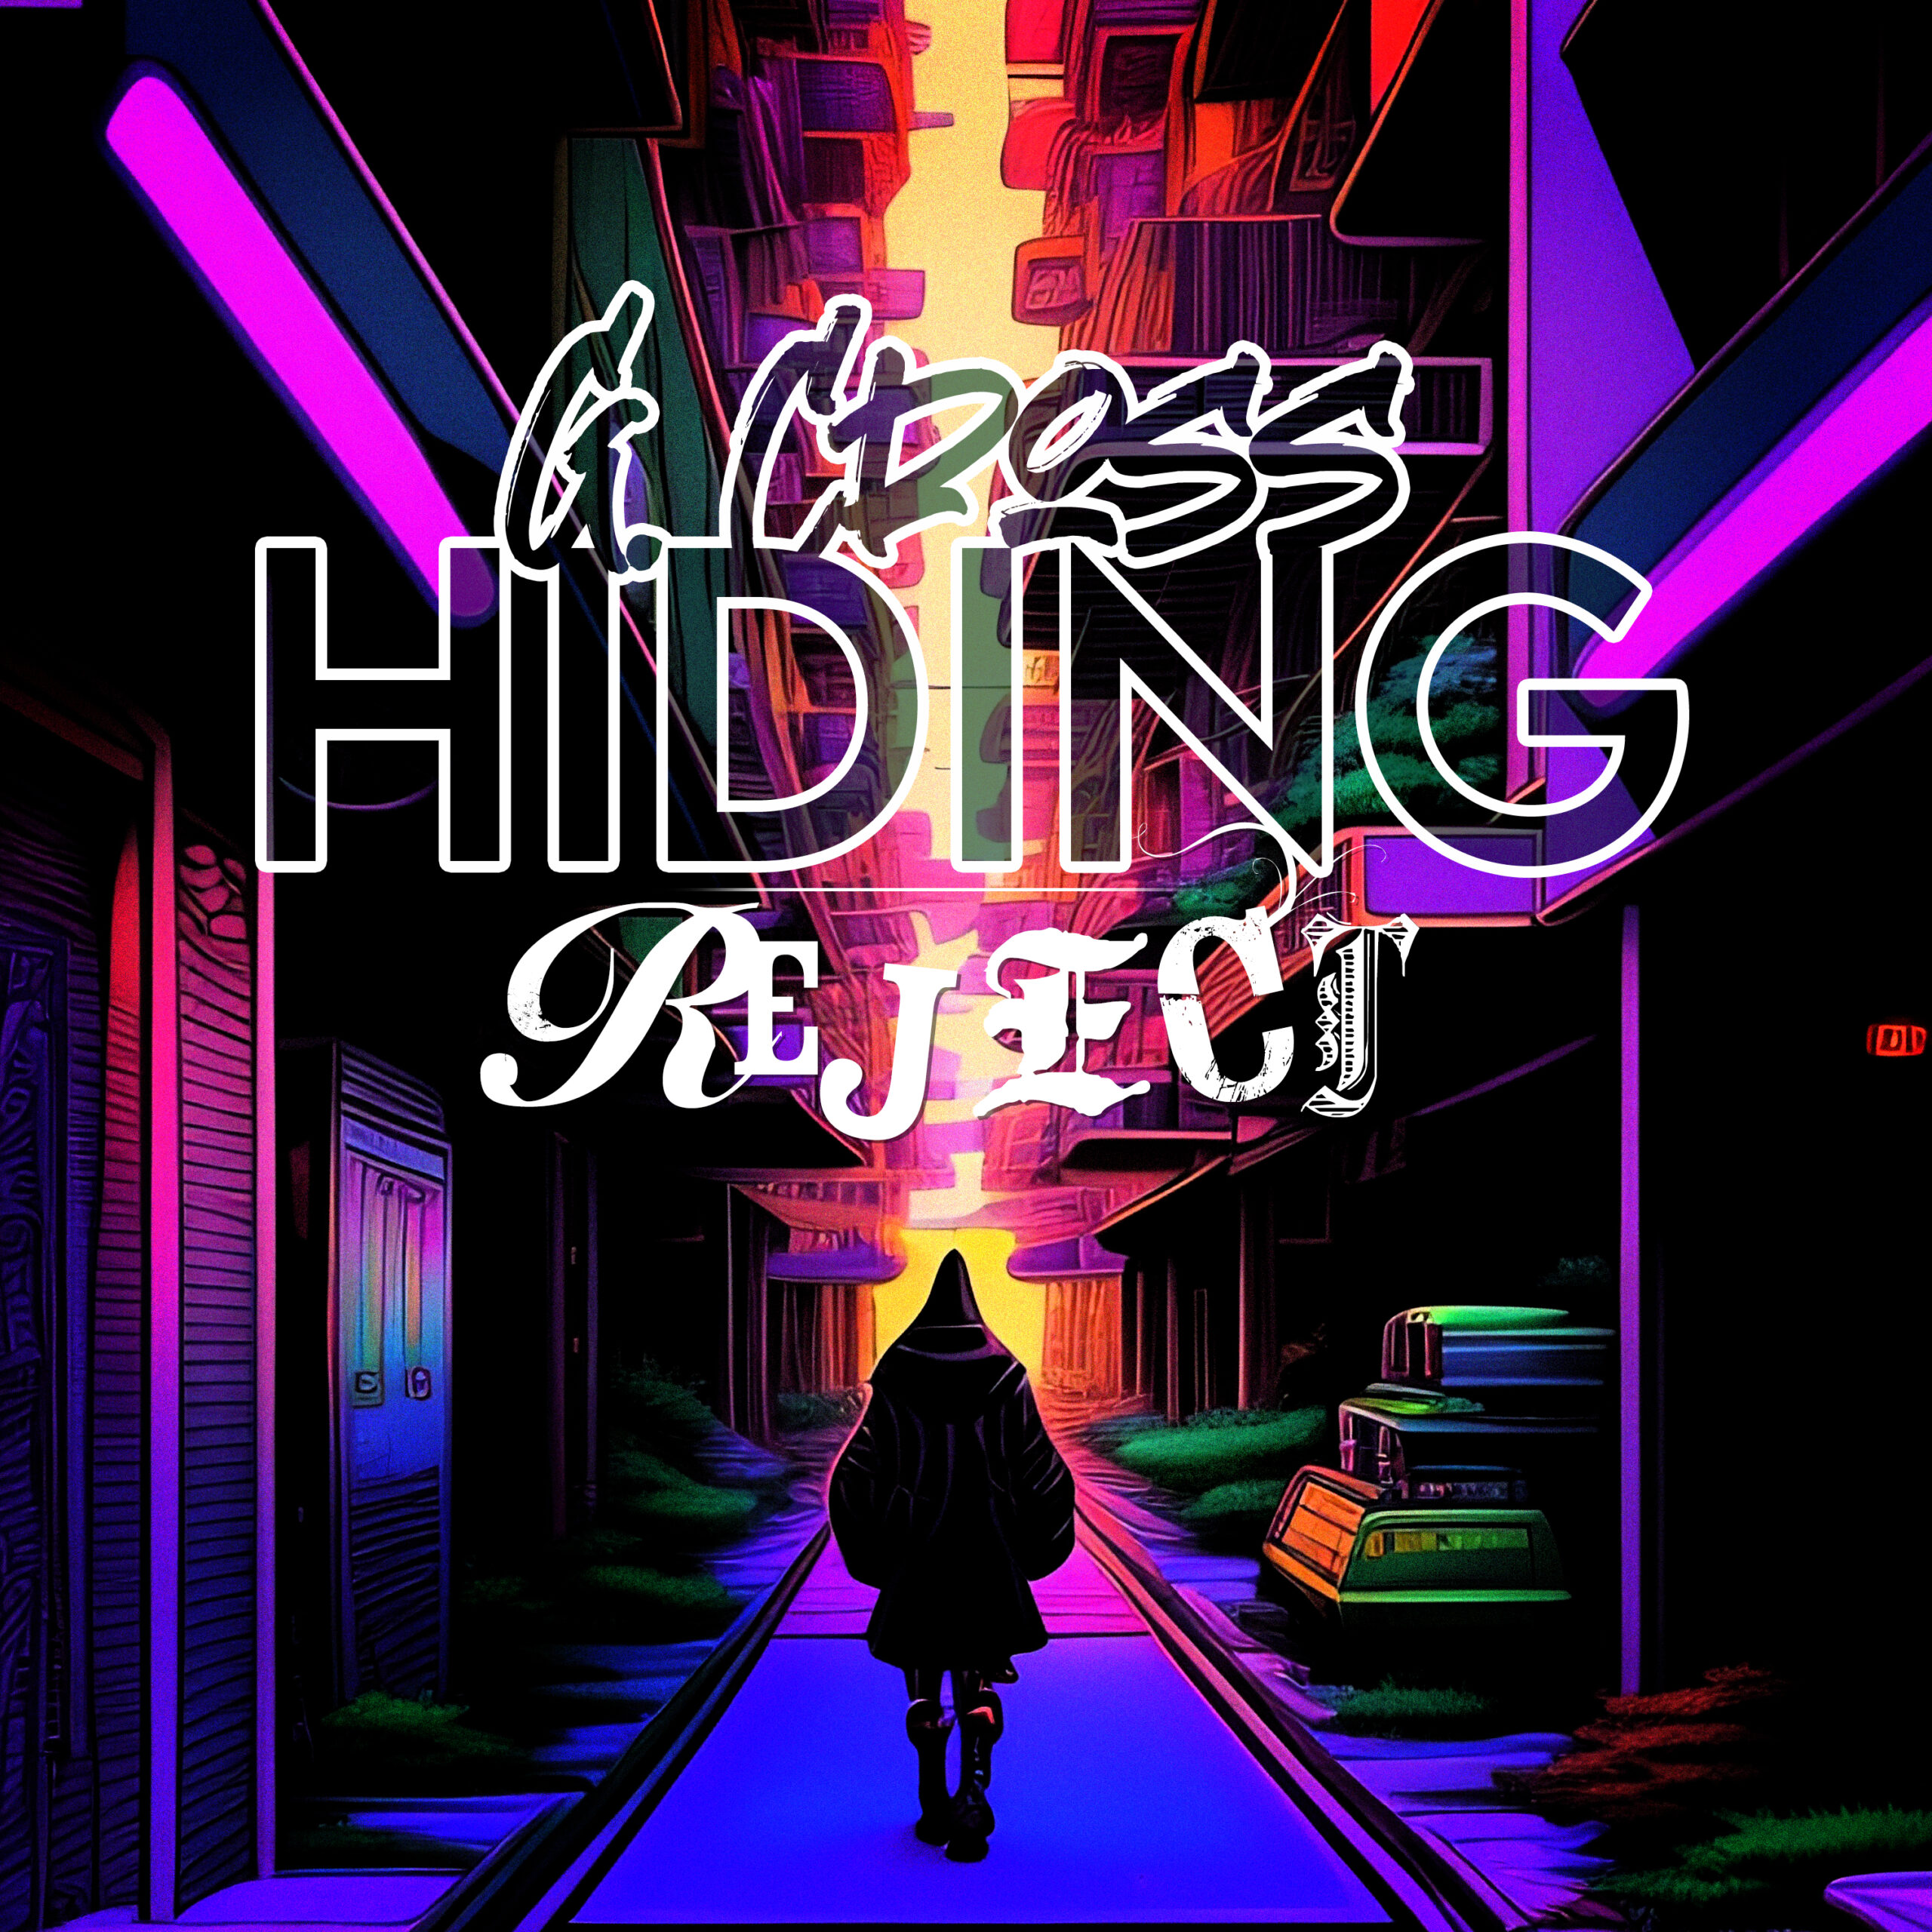 G. Cross  Hiding/Reject